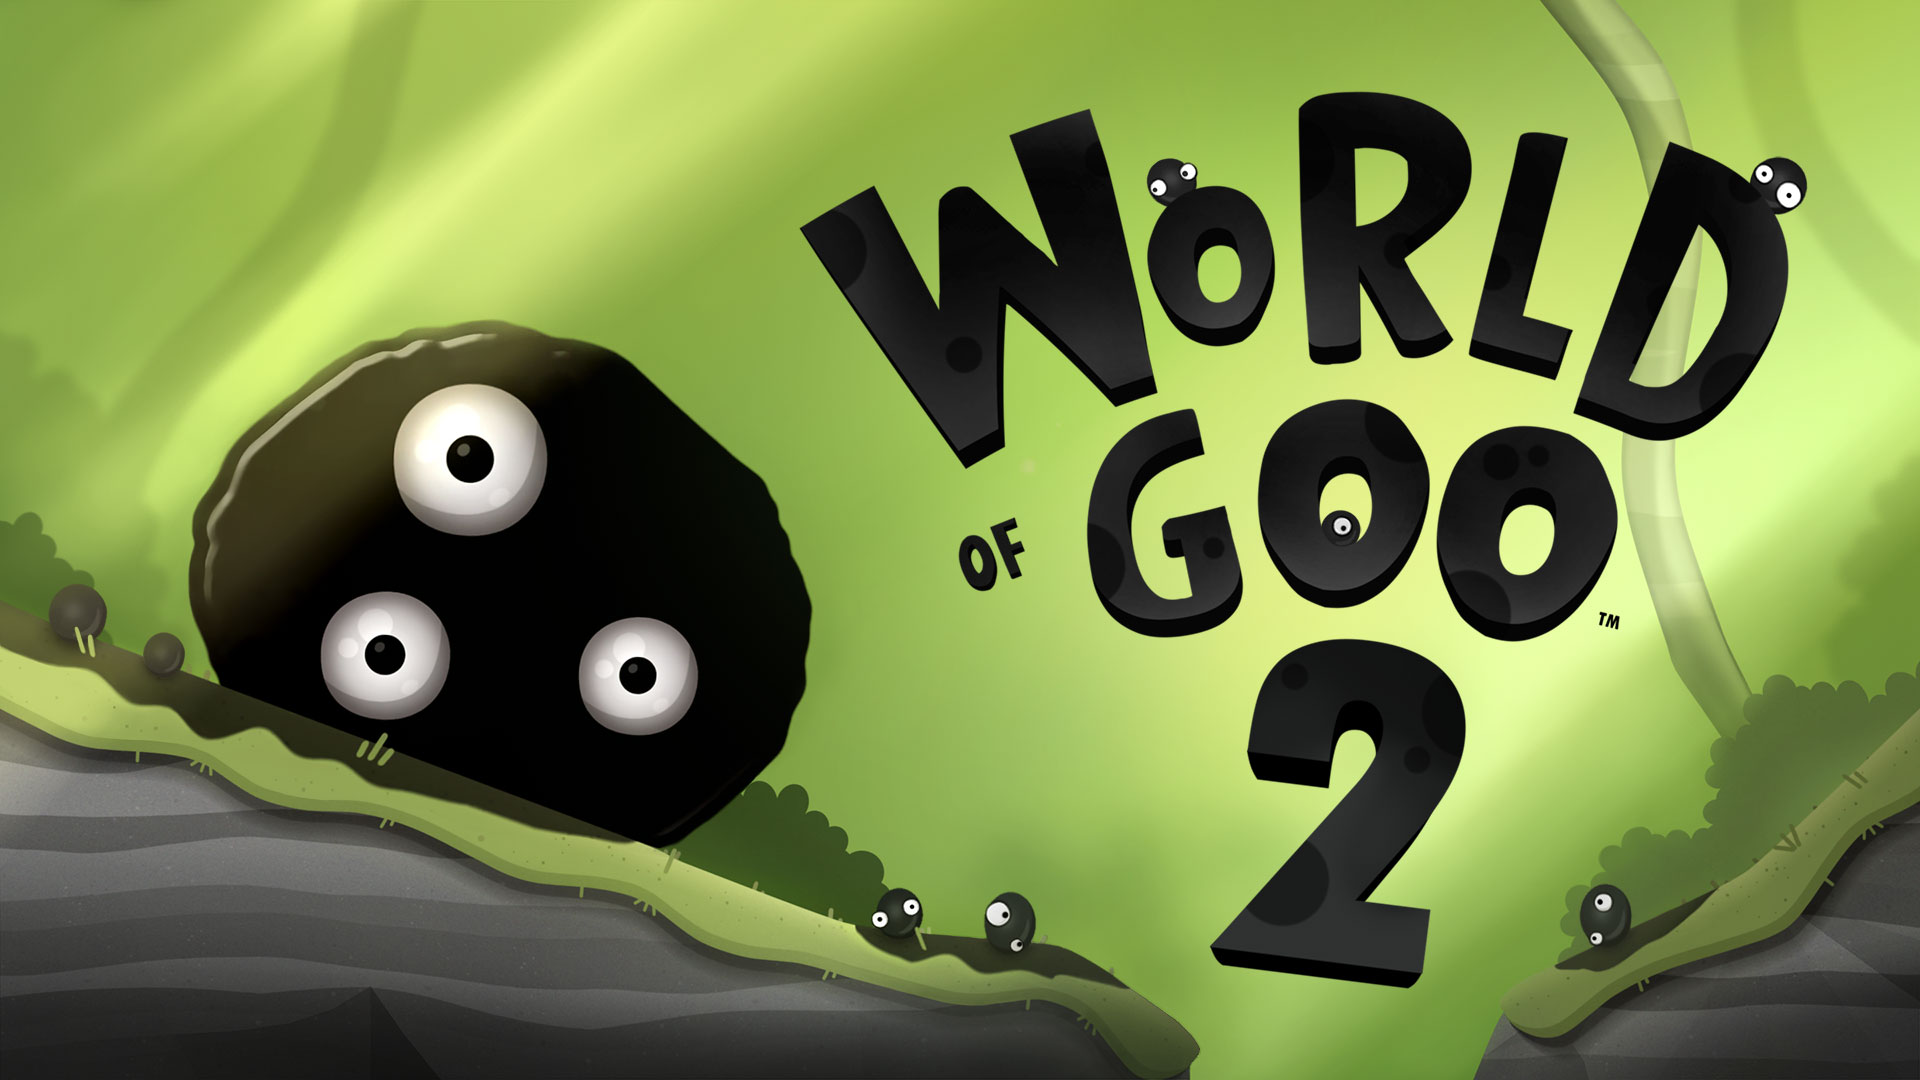 World of Goo 2